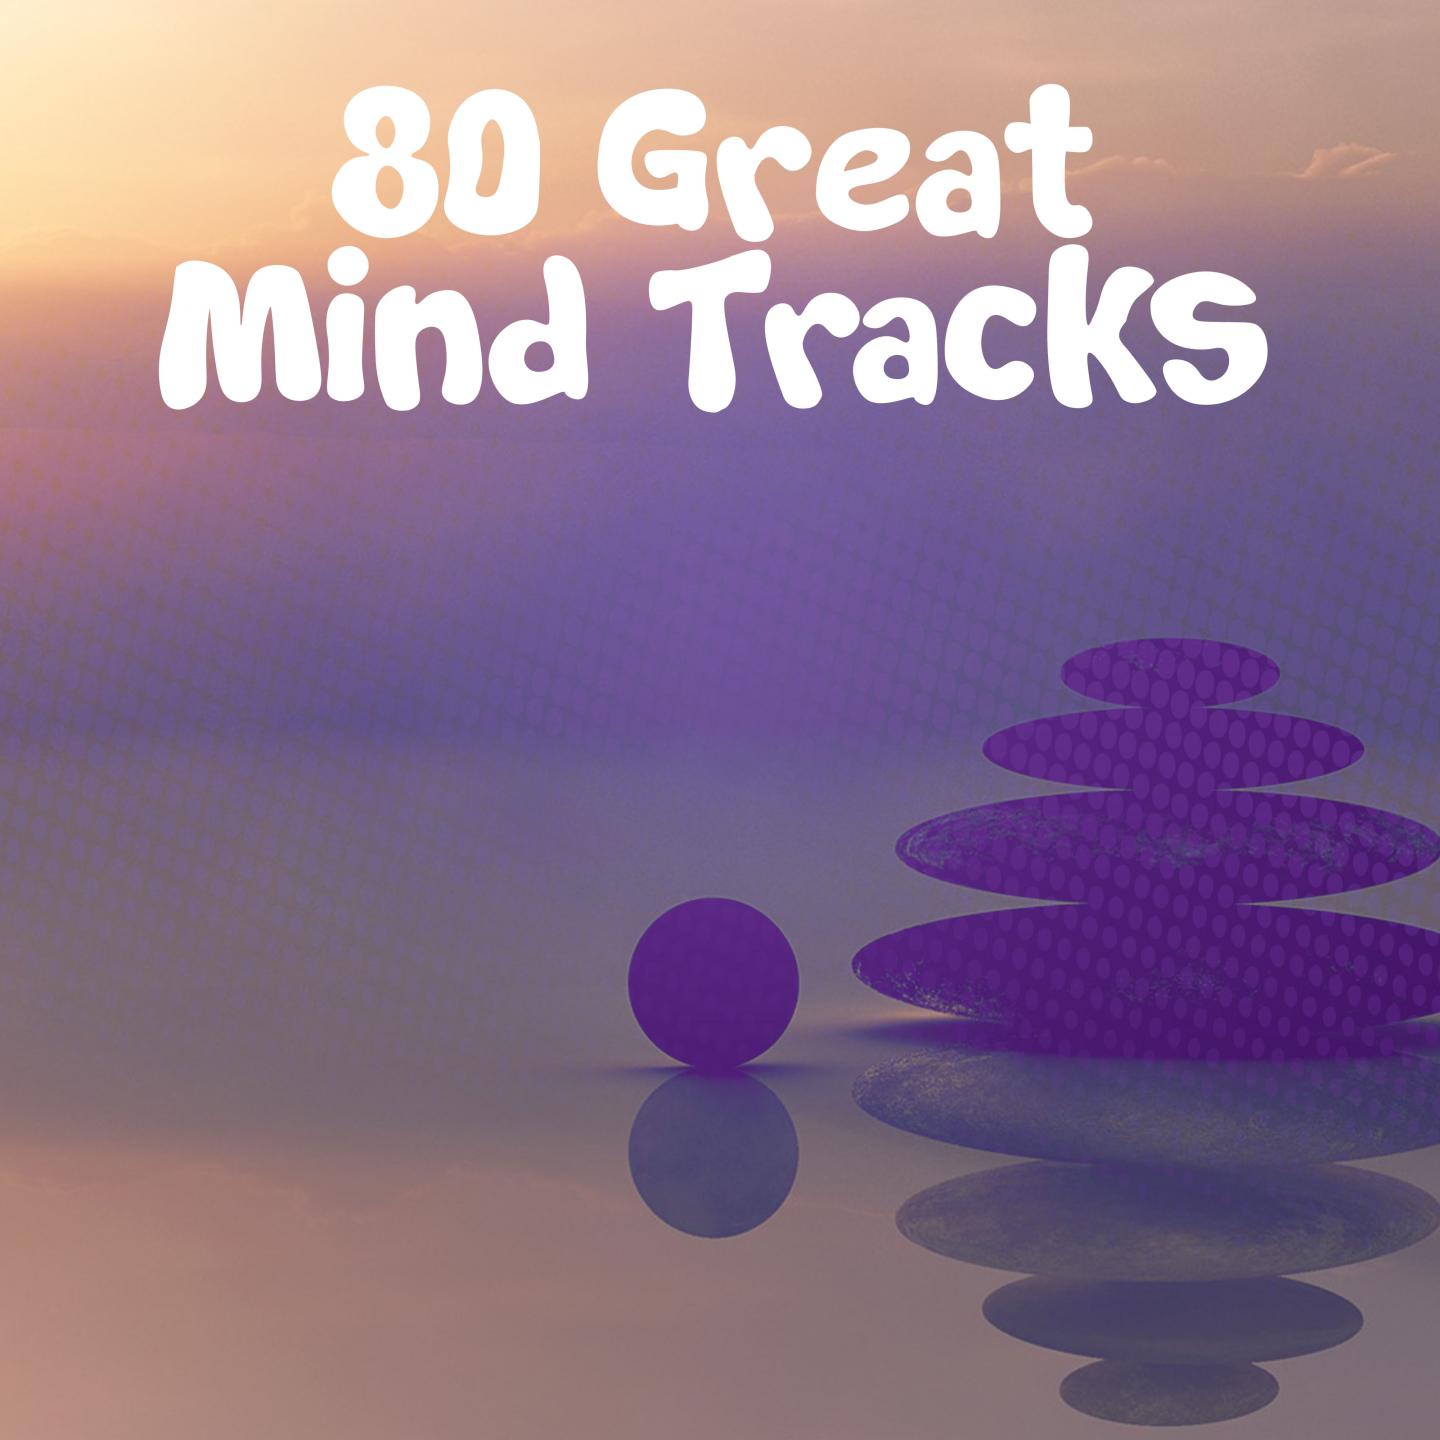 80 Great Mind Tracks